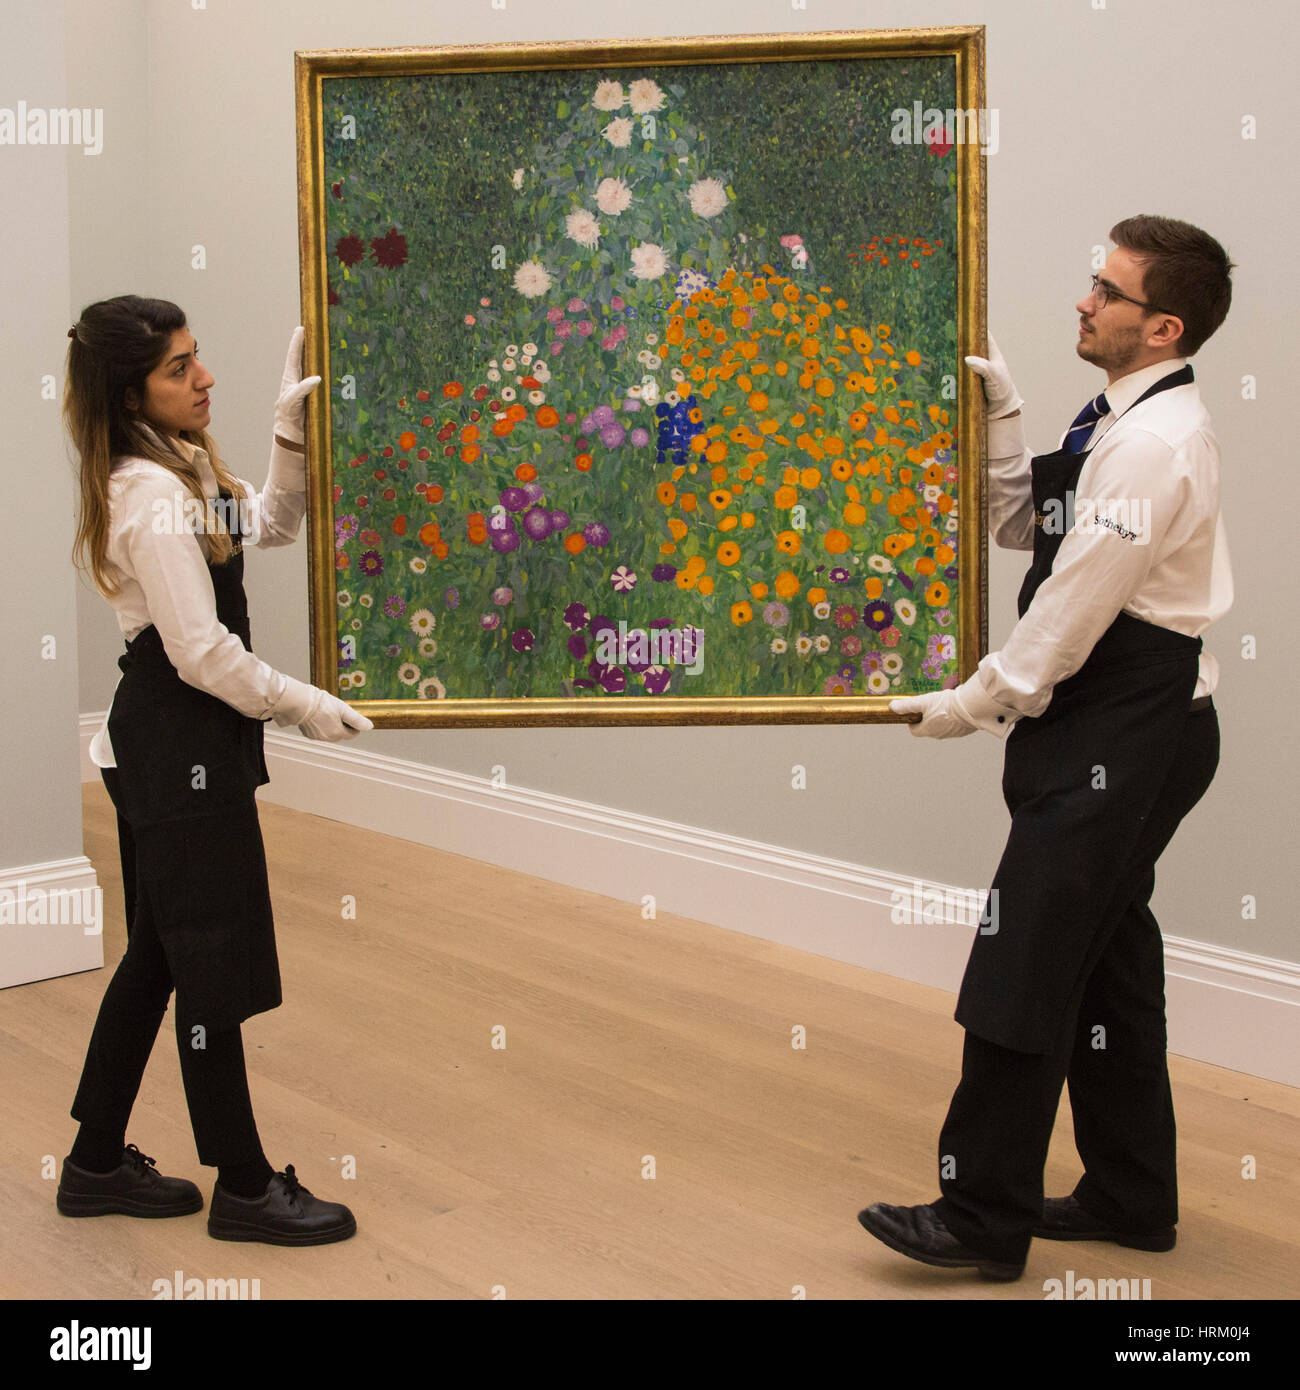 London, UK. 22 February 2017. Bauerngarten (Blumengarten) by Gustav Klimt, 1907, est. GBP 35m. Sotheby's present highlights from the Impressionist and Modern Art Sale on 1 March 2017. Stock Photo